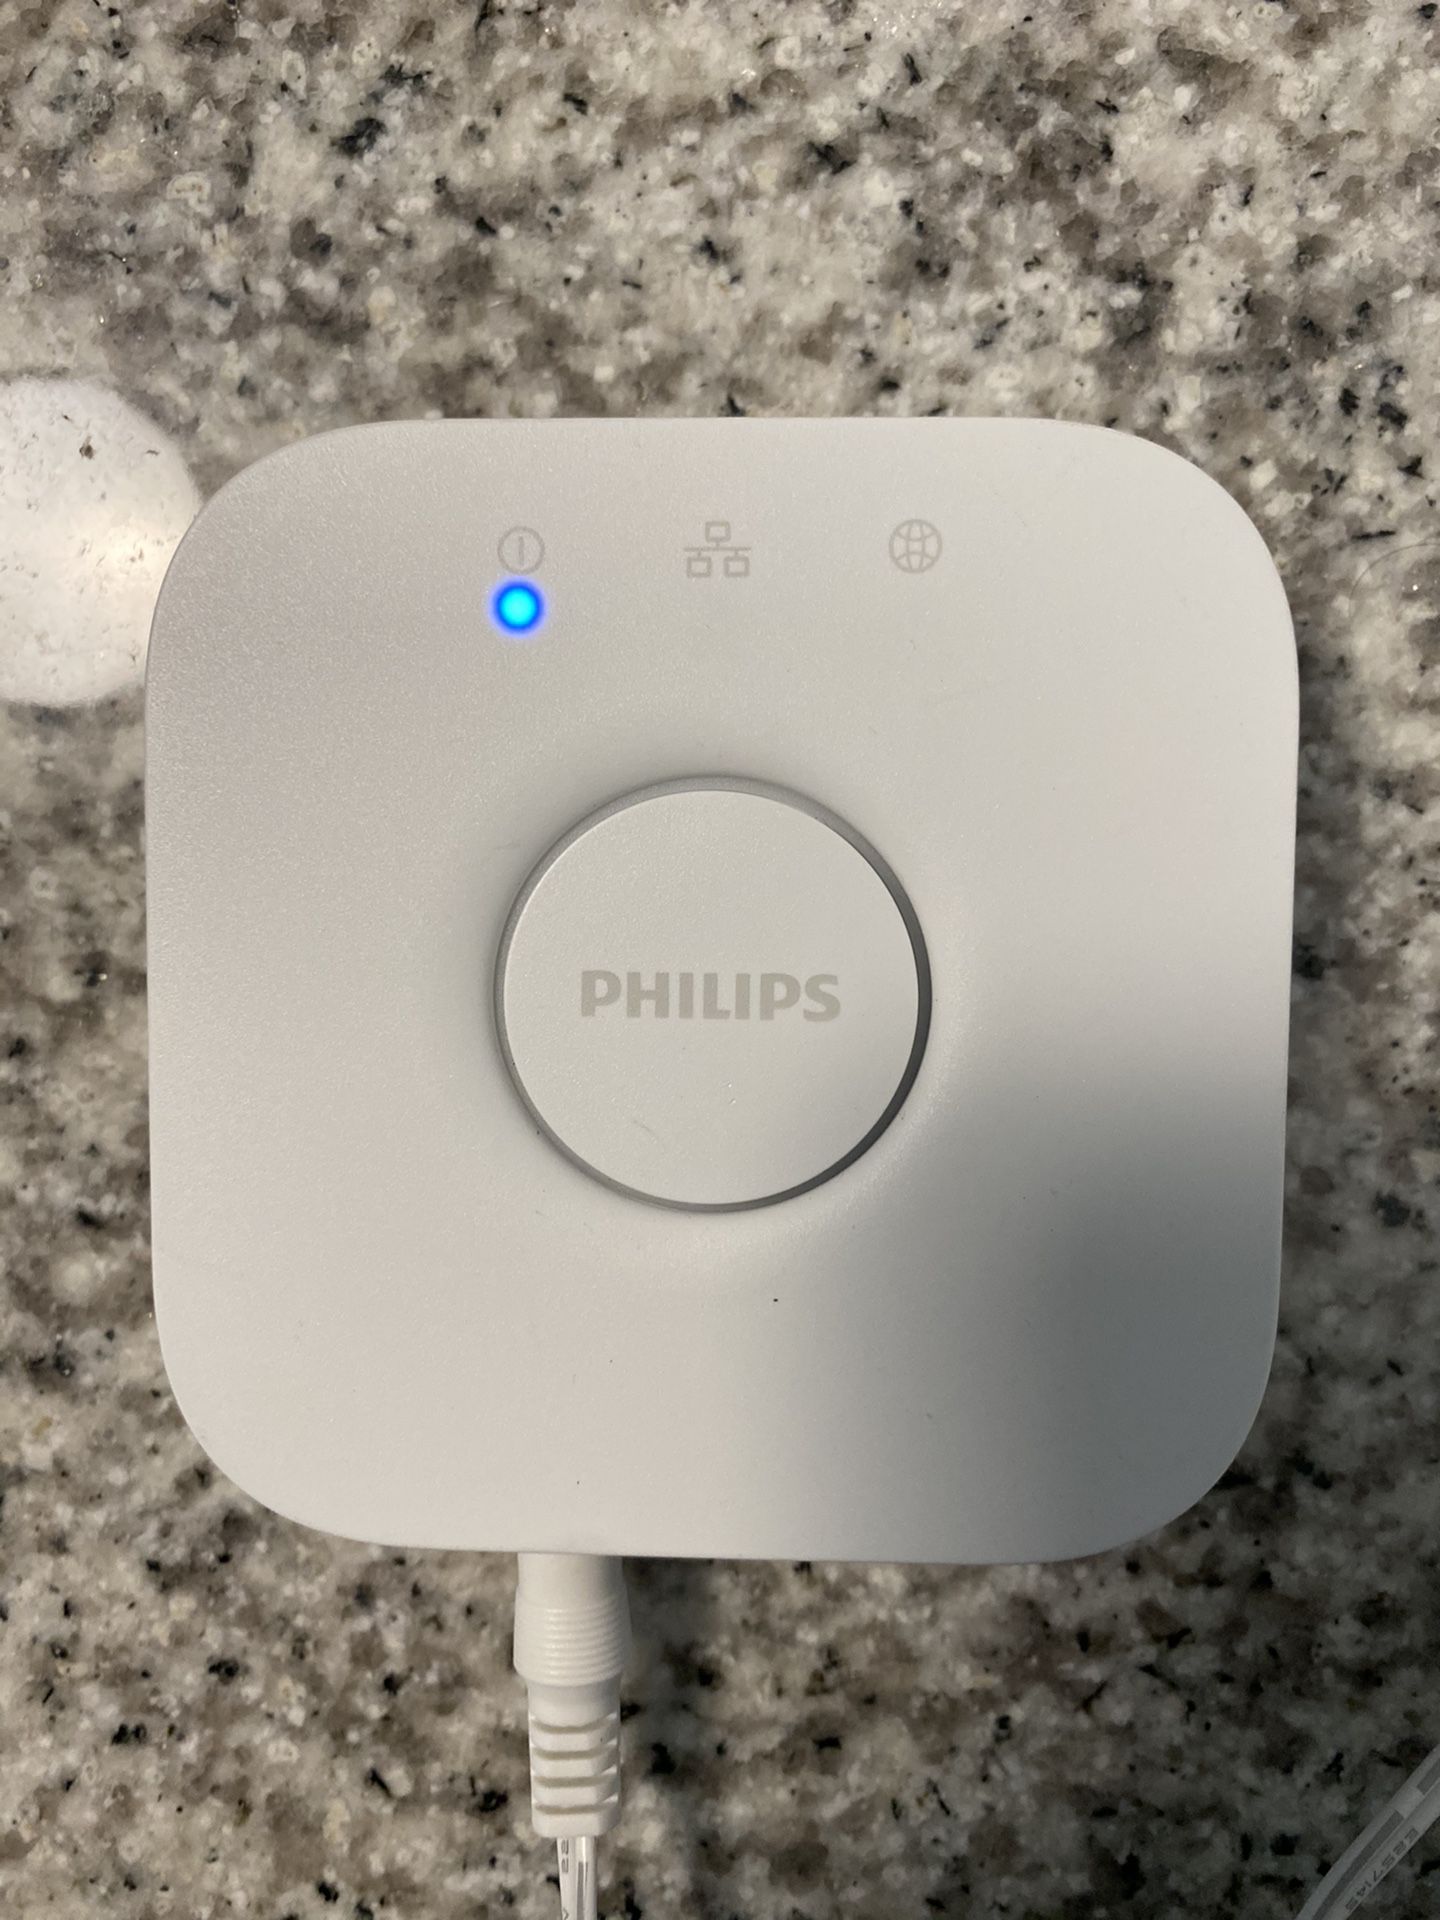 Philips hue smarthub ( works with Alexa, Apple HomeKit and google assistant)